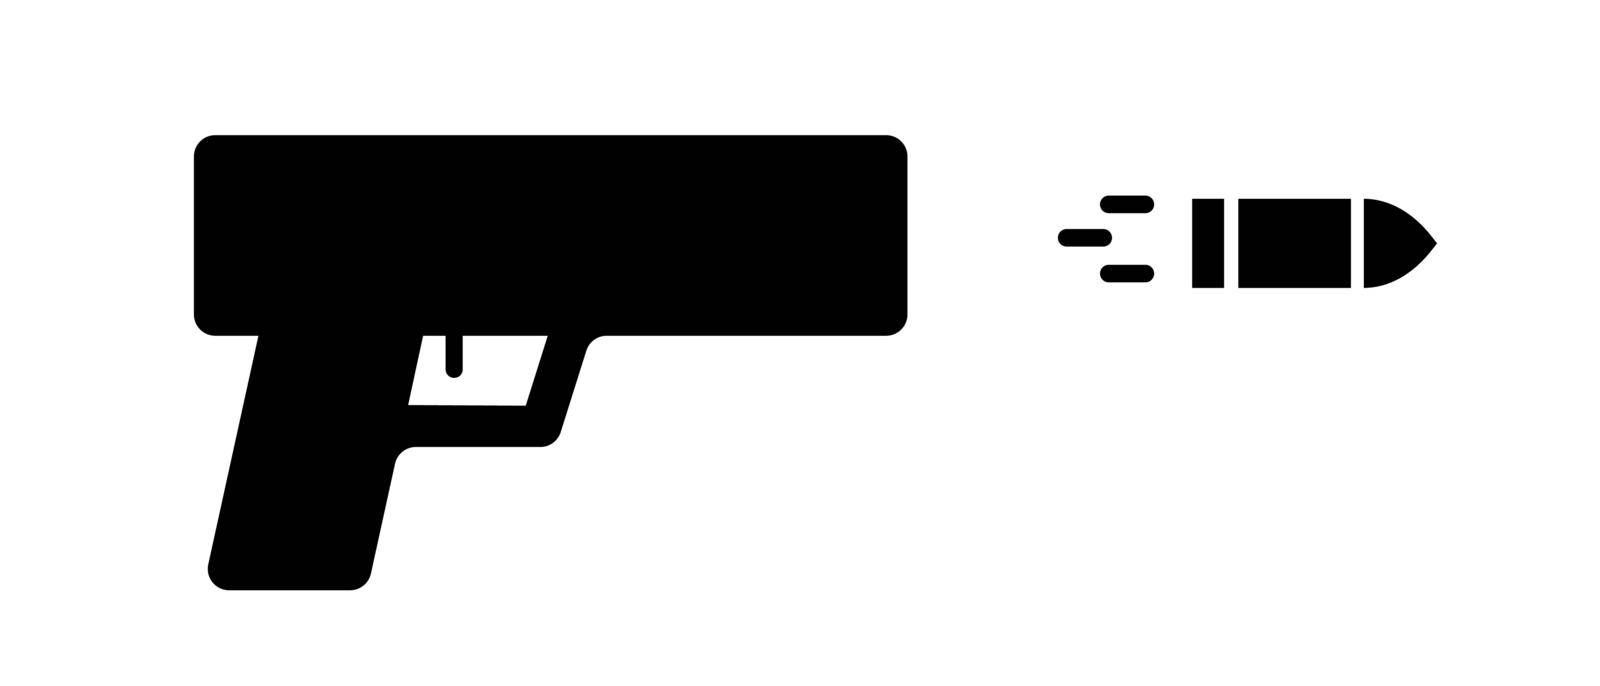 Gun and bullet silhouette icon. Gunfire. Vector. by illust_monster